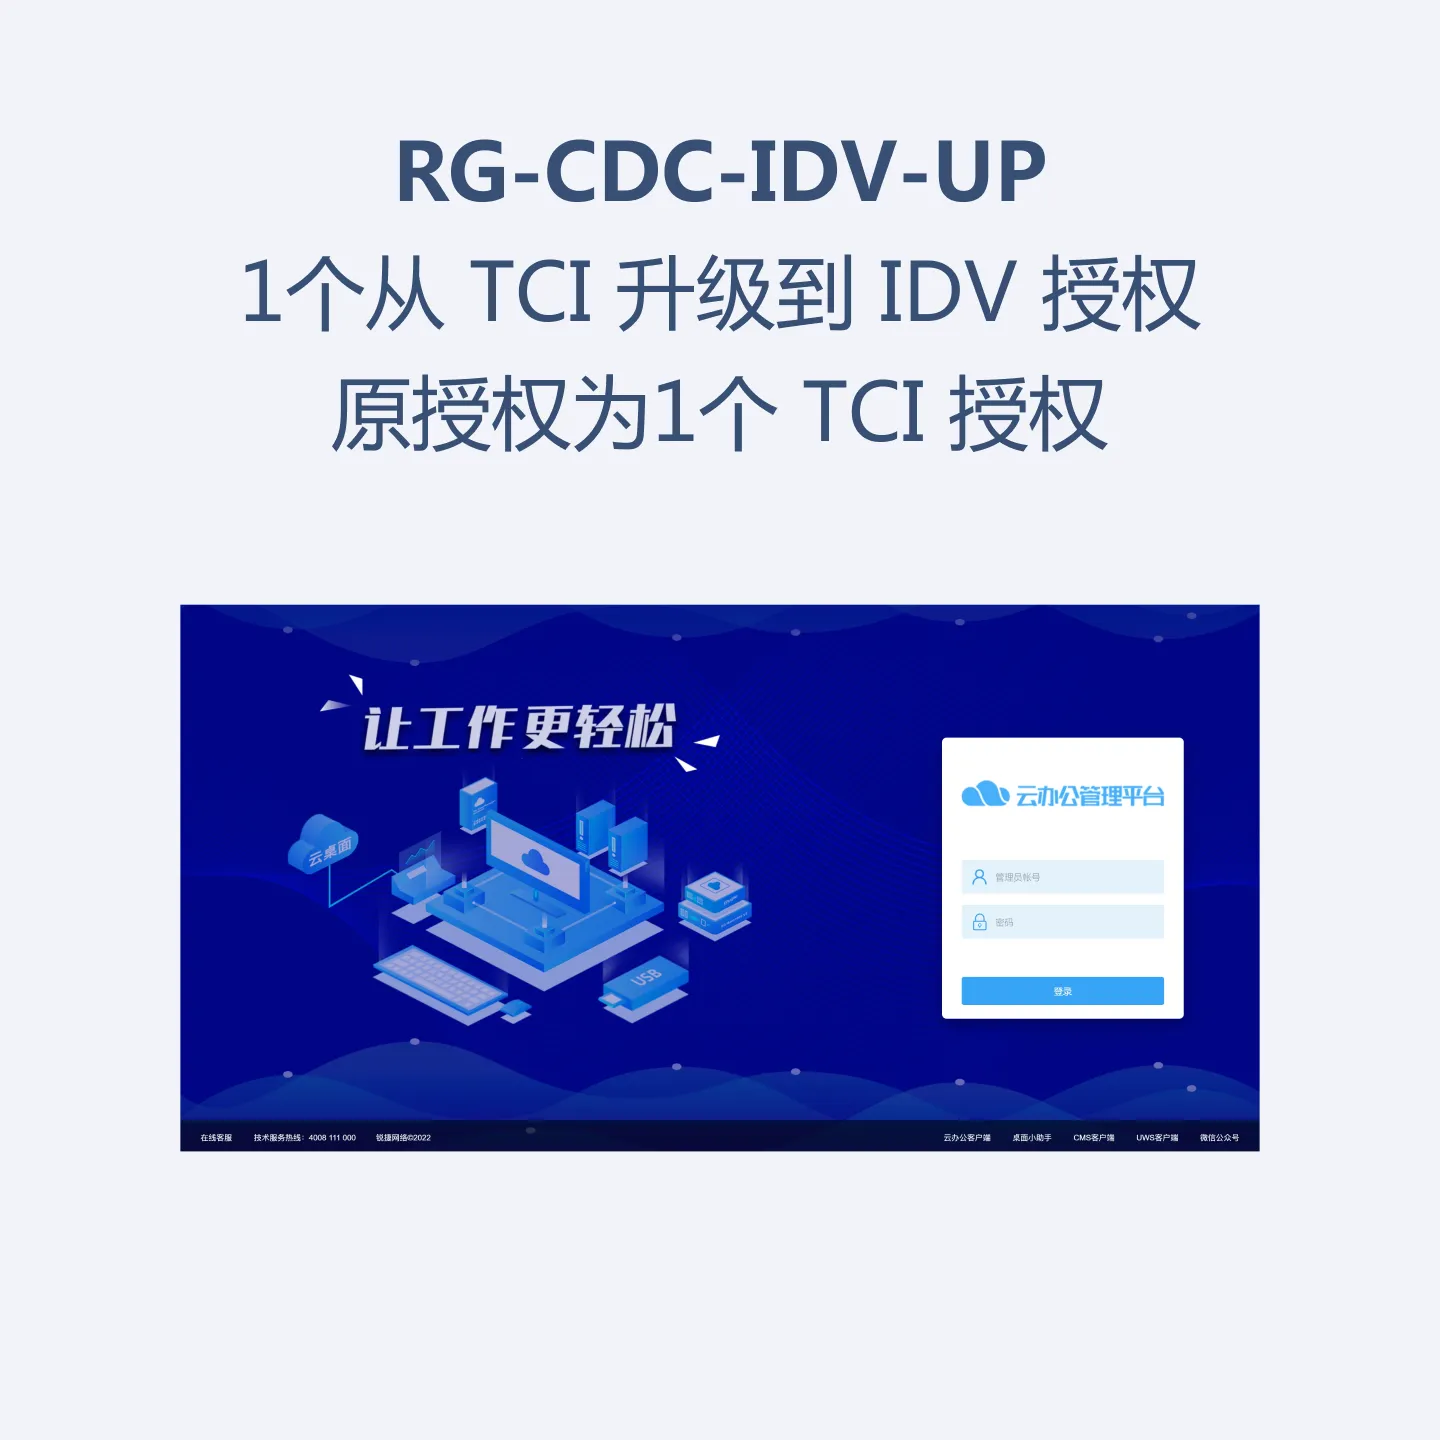 RG-CDC-IDV-UP